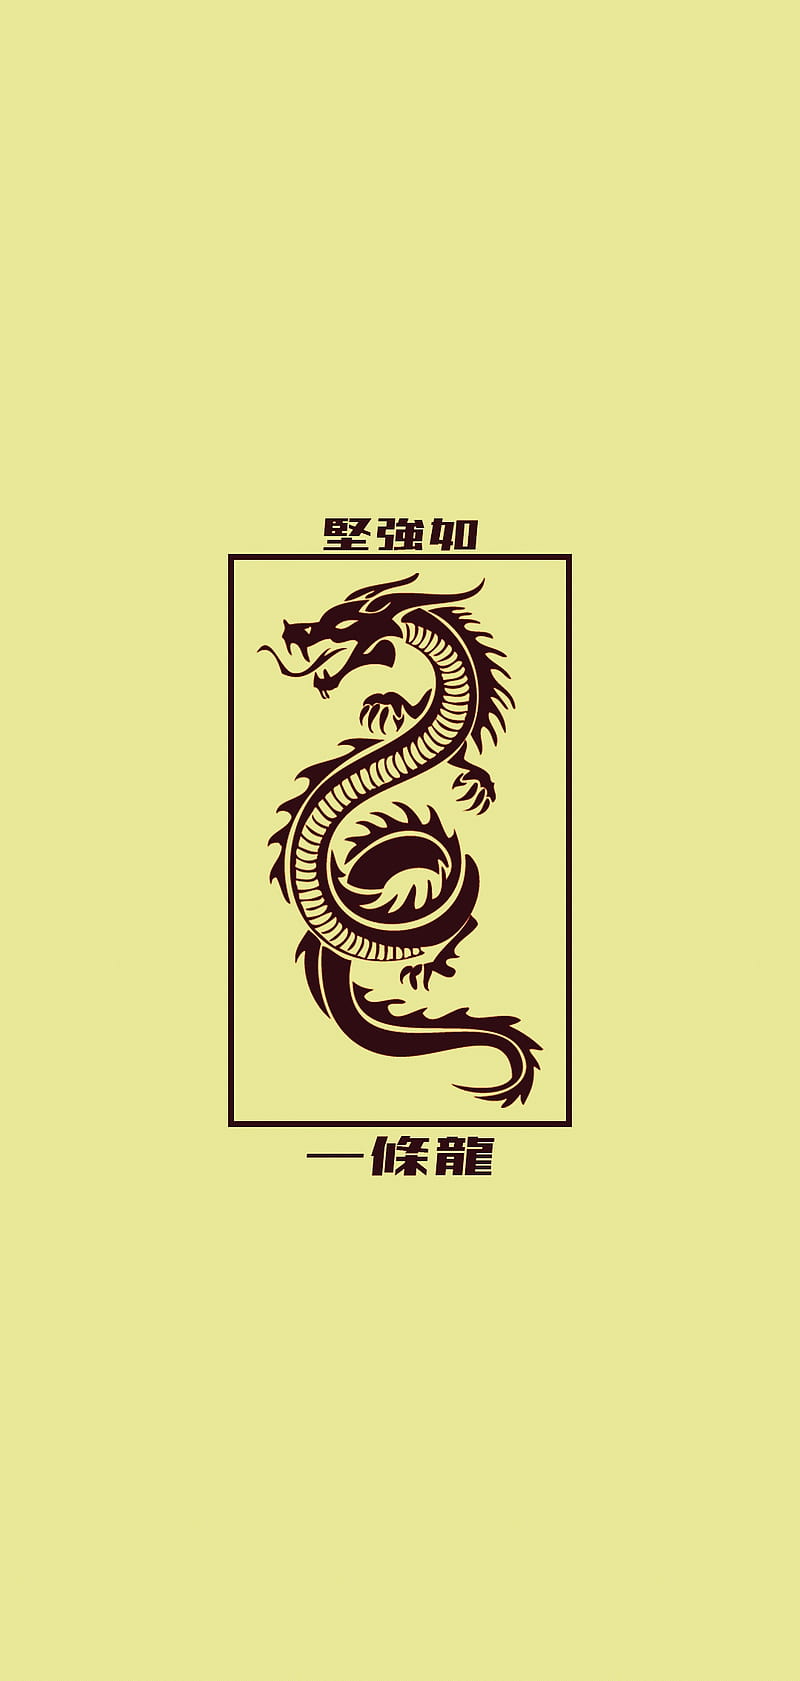 Tokyo Japan Dragon Wallpaper Discover more Aesthetic Japan Dragon Dragon  Dragon Tattoo Japan   Dragon wallpaper iphone Blue dragon tattoo Dragon  illustration